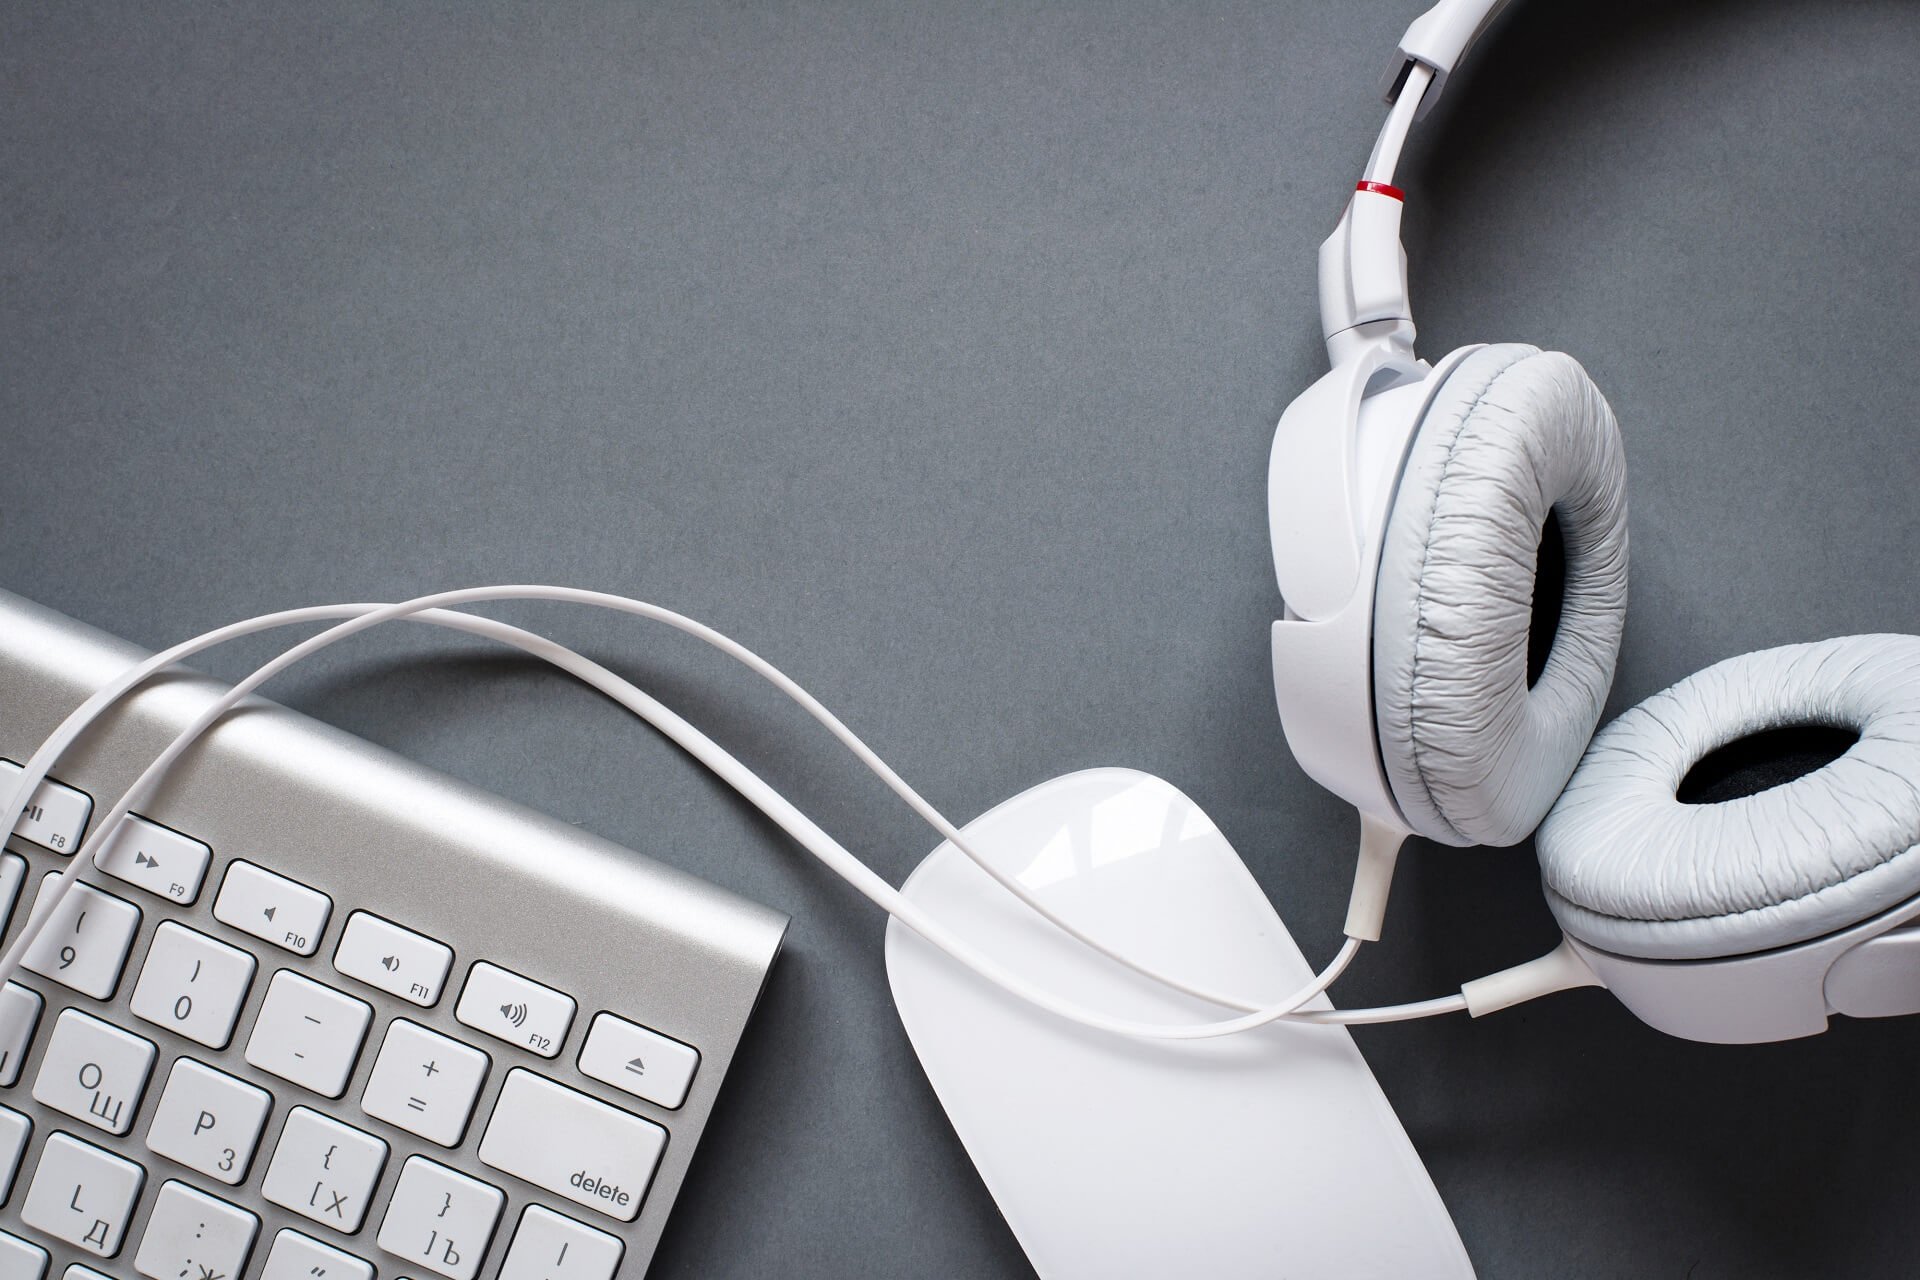 Macbook isn't playing music through headphones